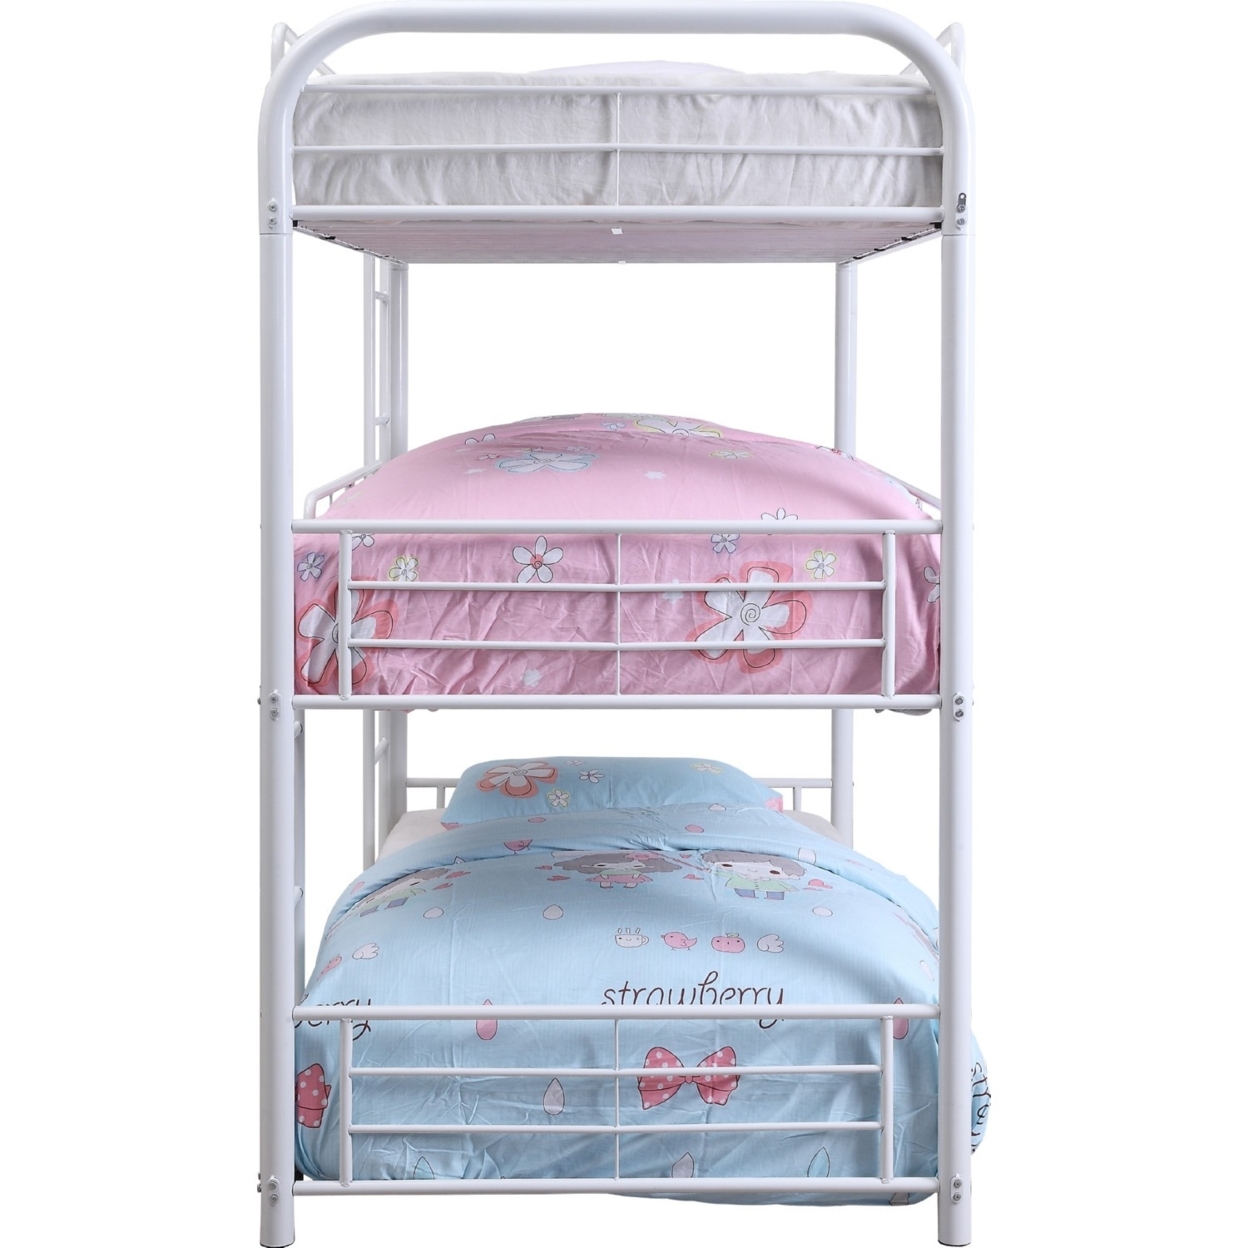 3 Tier Industrial Style Full Size Metal Bunk Bed, White- Saltoro Sherpi